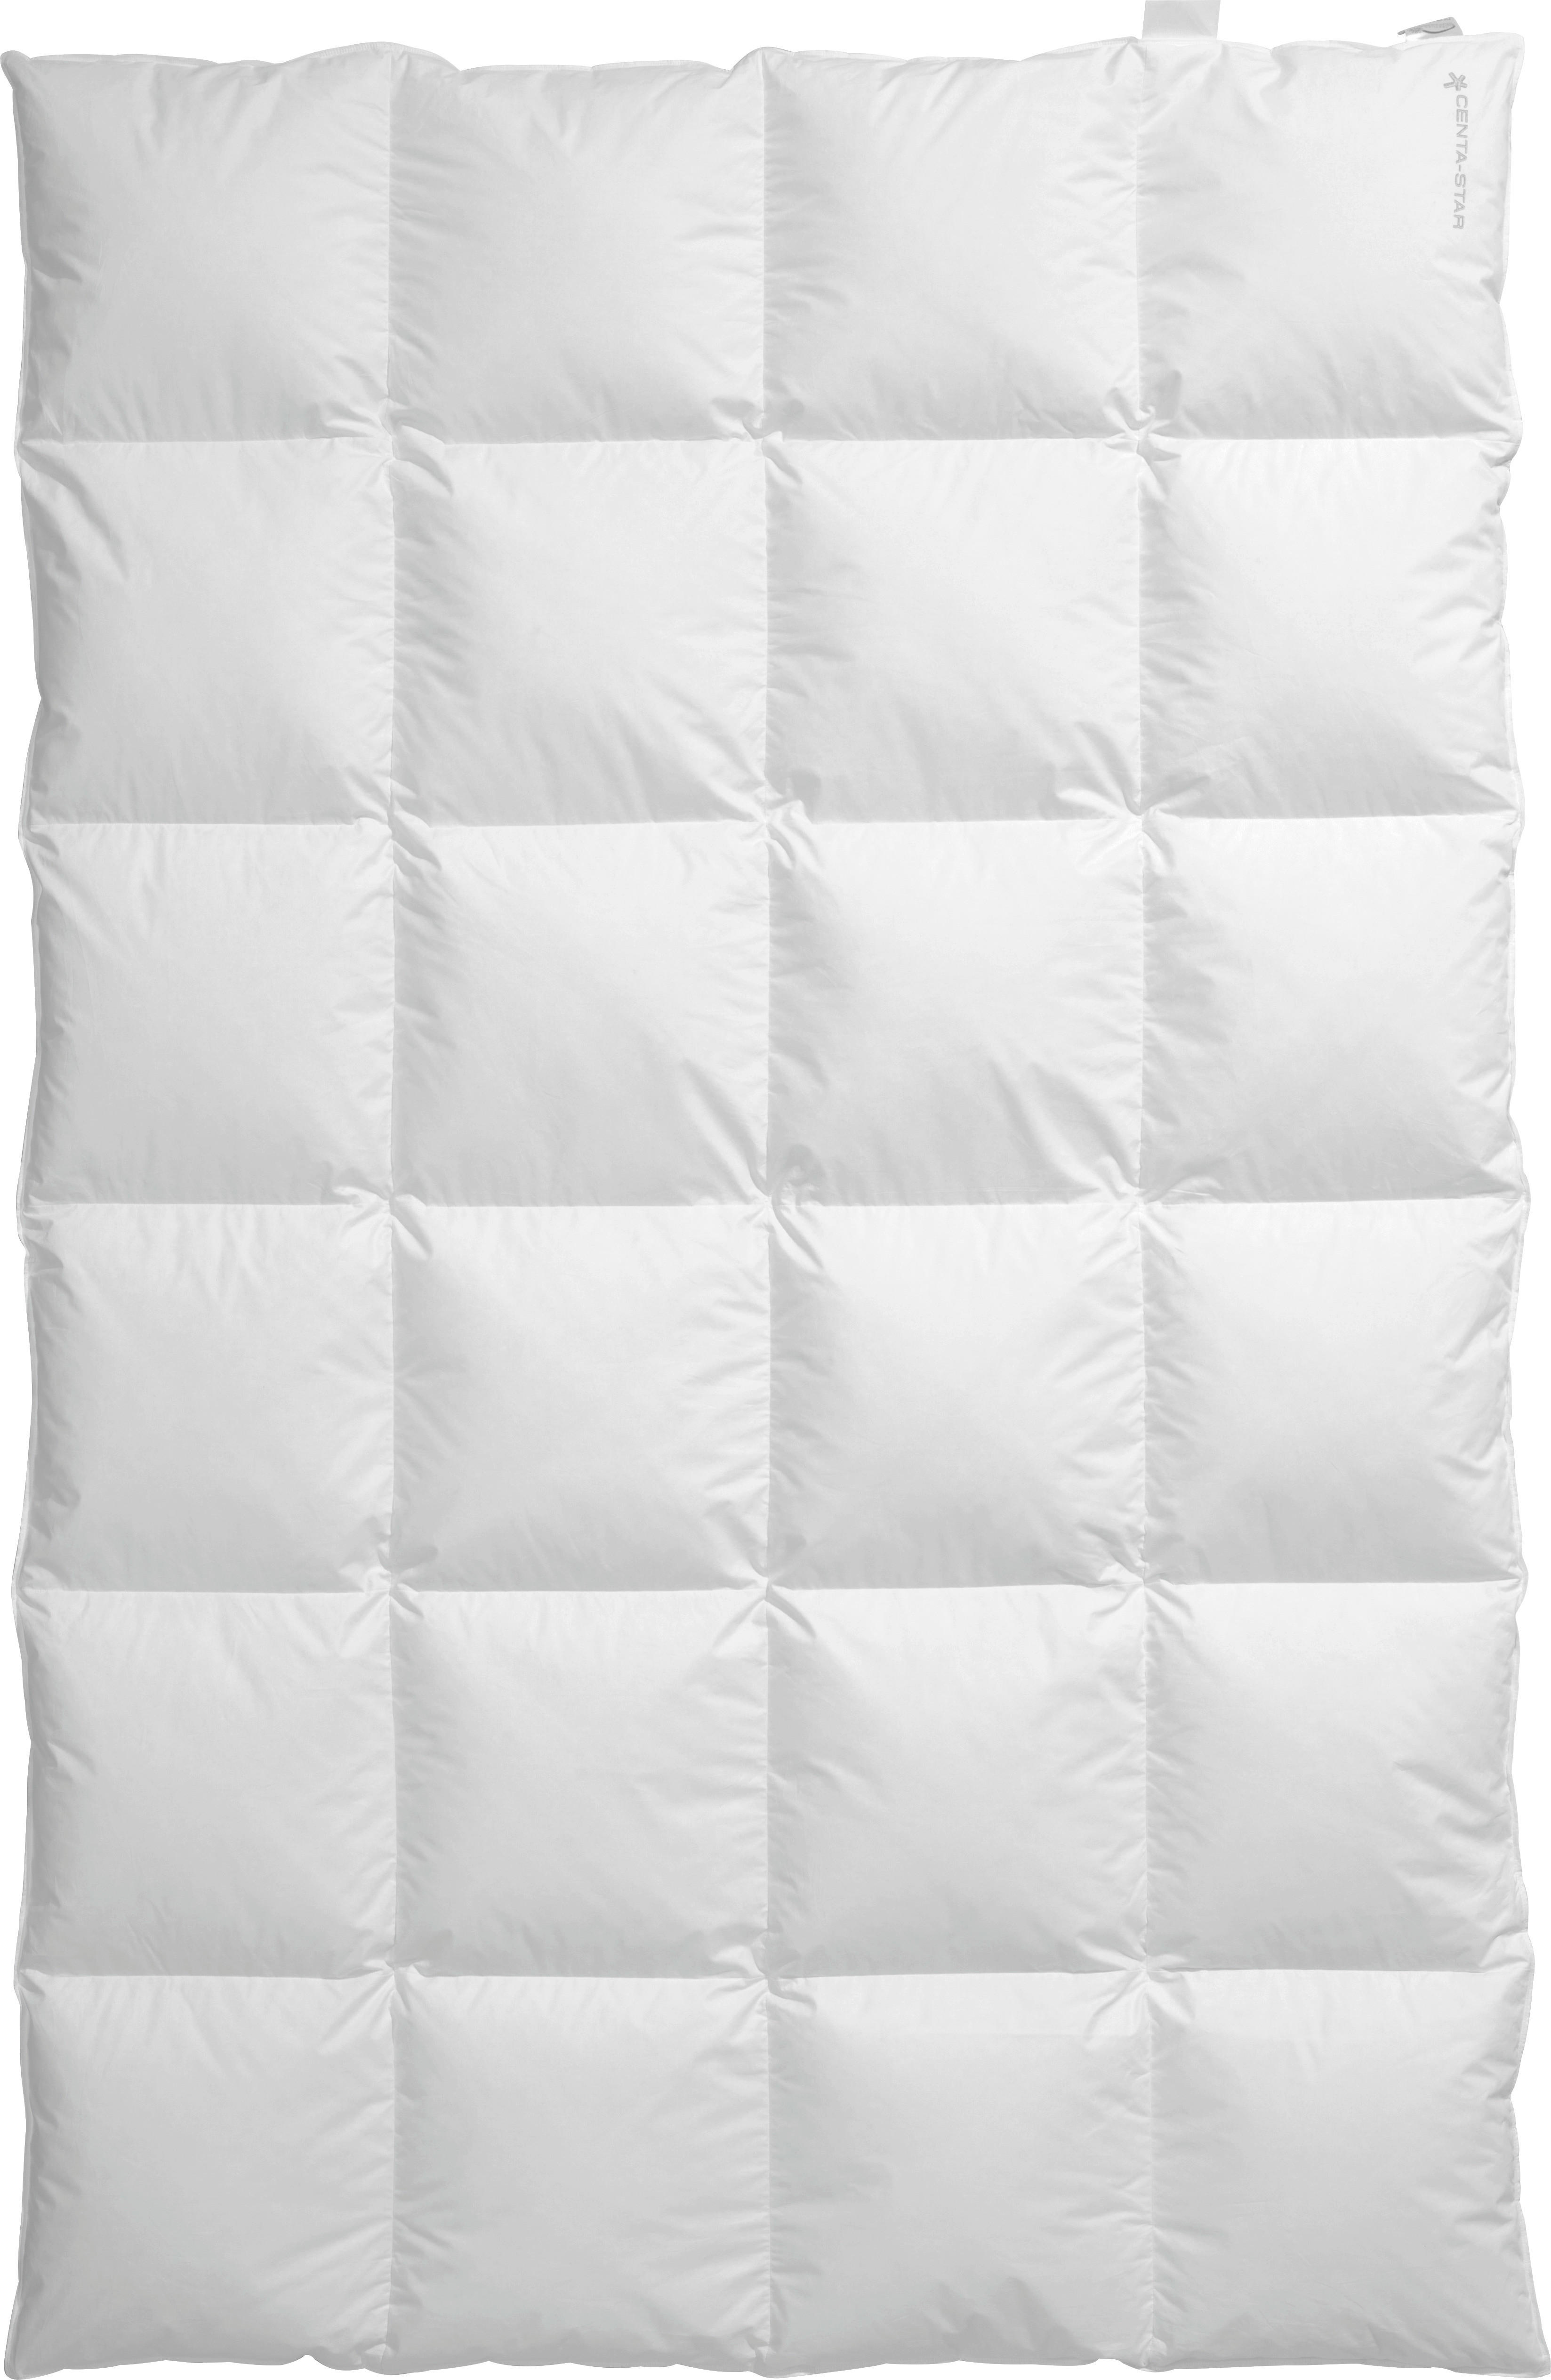 KASSETTENDECKE  Silence  155/220 cm   - Weiß, Design, Textil (155/220cm) - Centa-Star